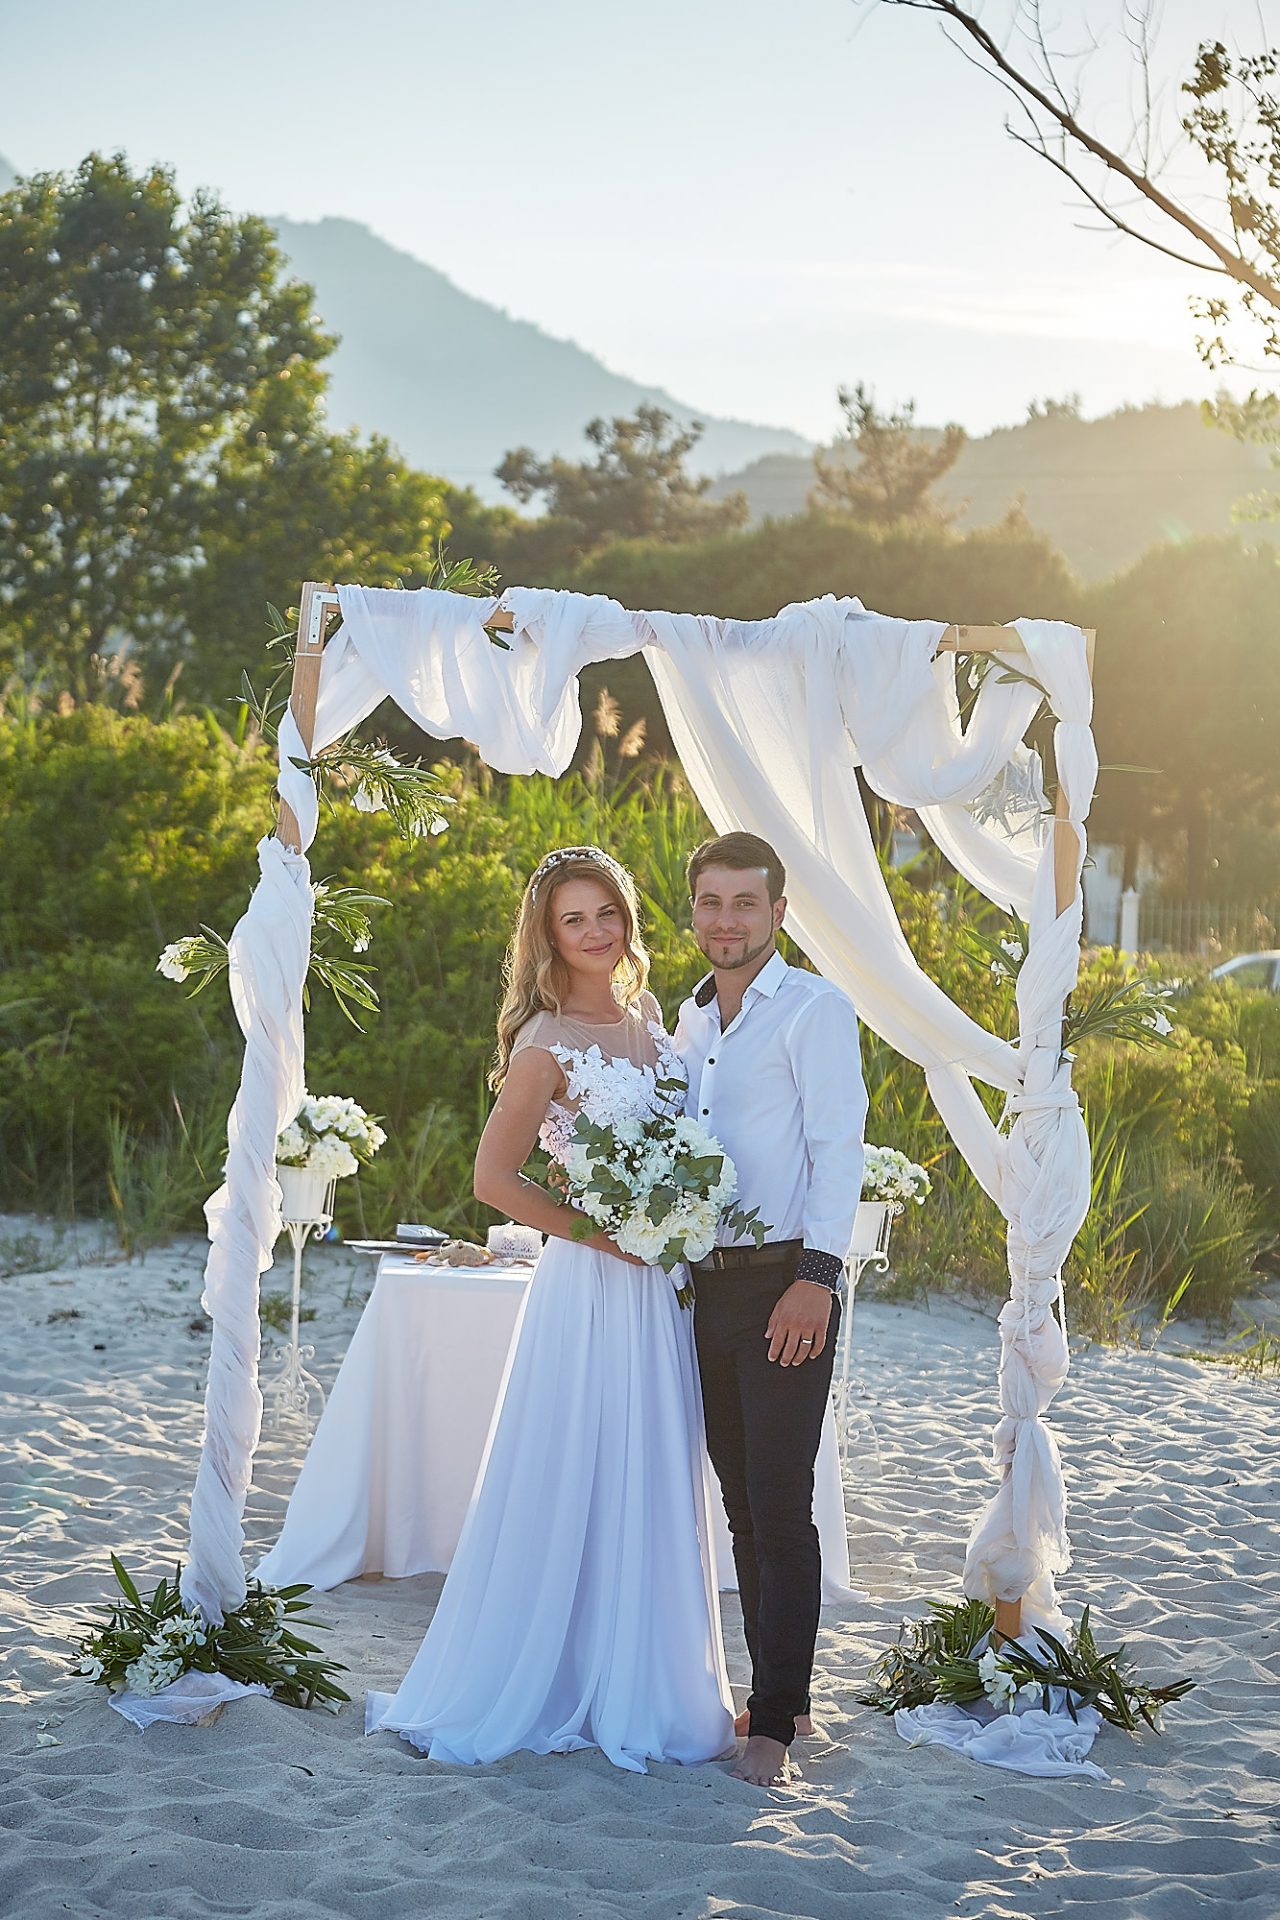 Thassos Golden Beach Wedding on the beach wedding table and decor